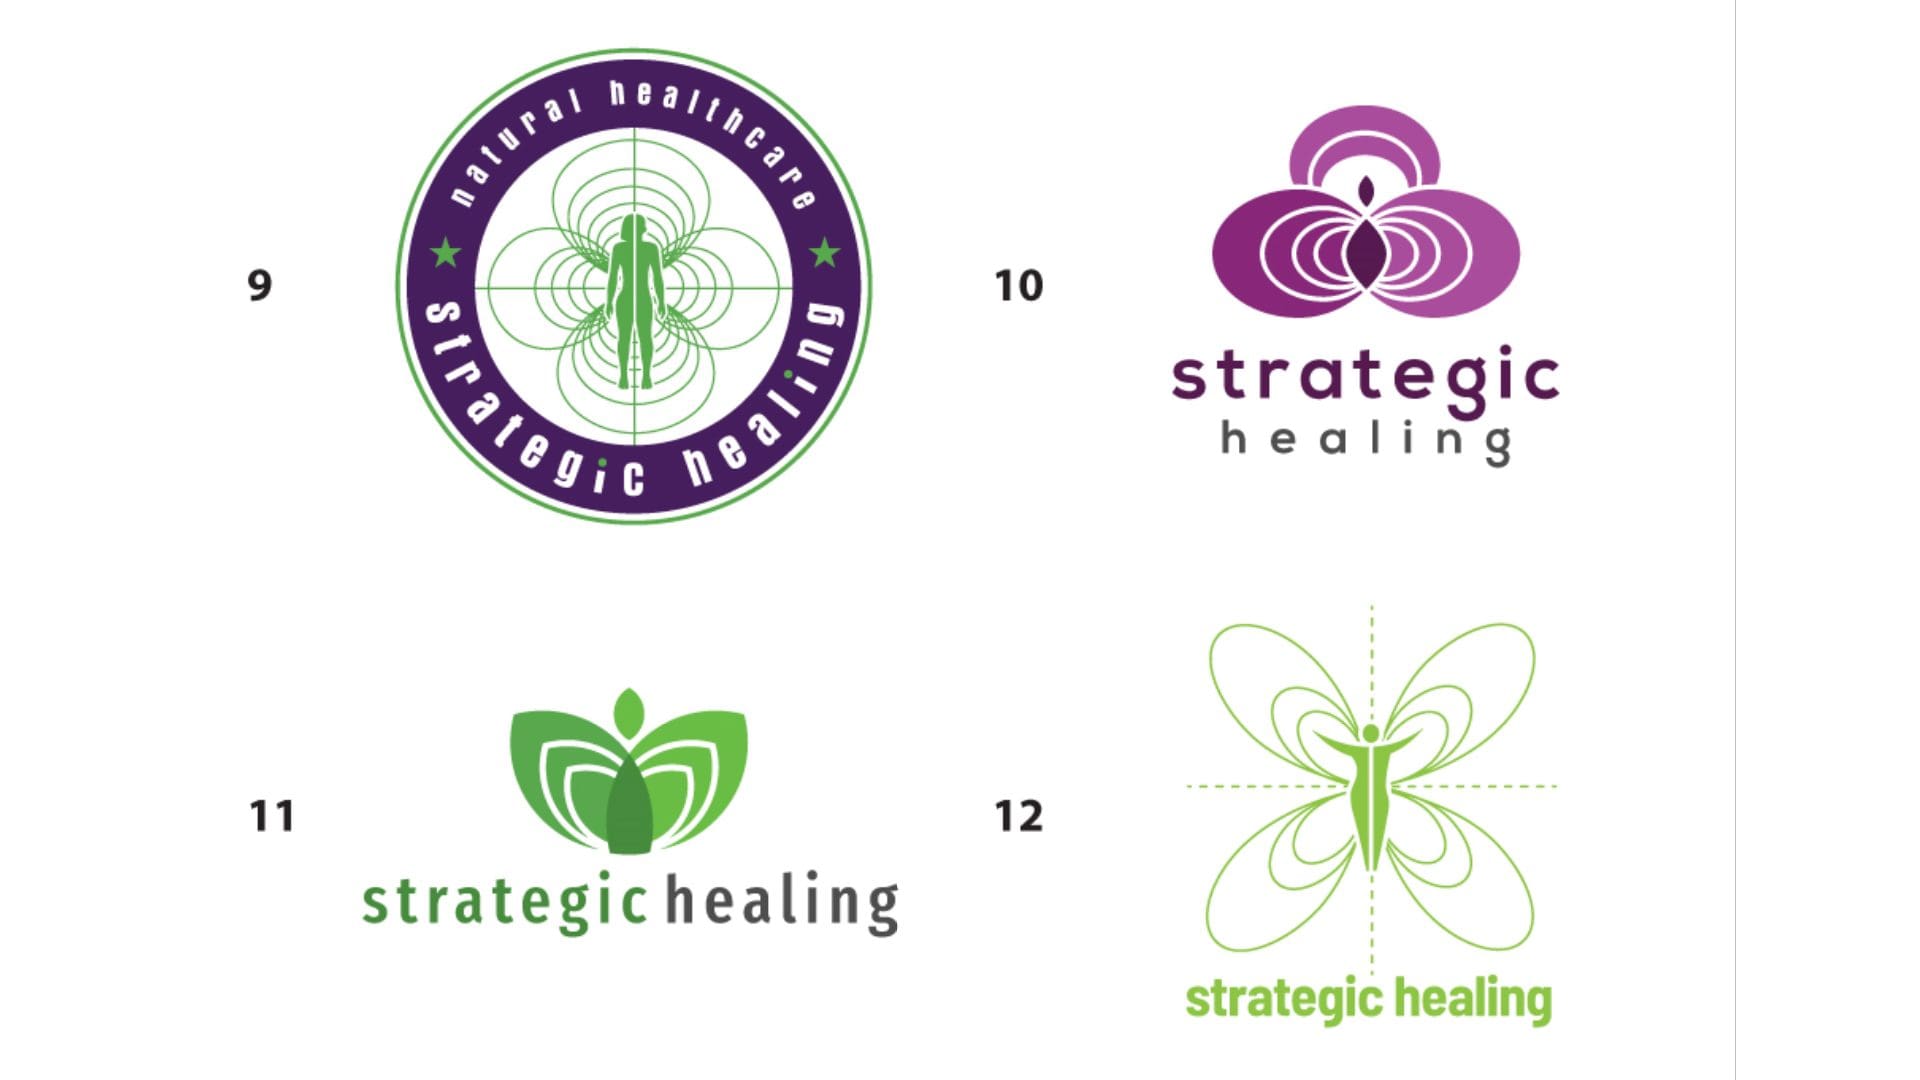 Strategic Healing - Concept 9-12